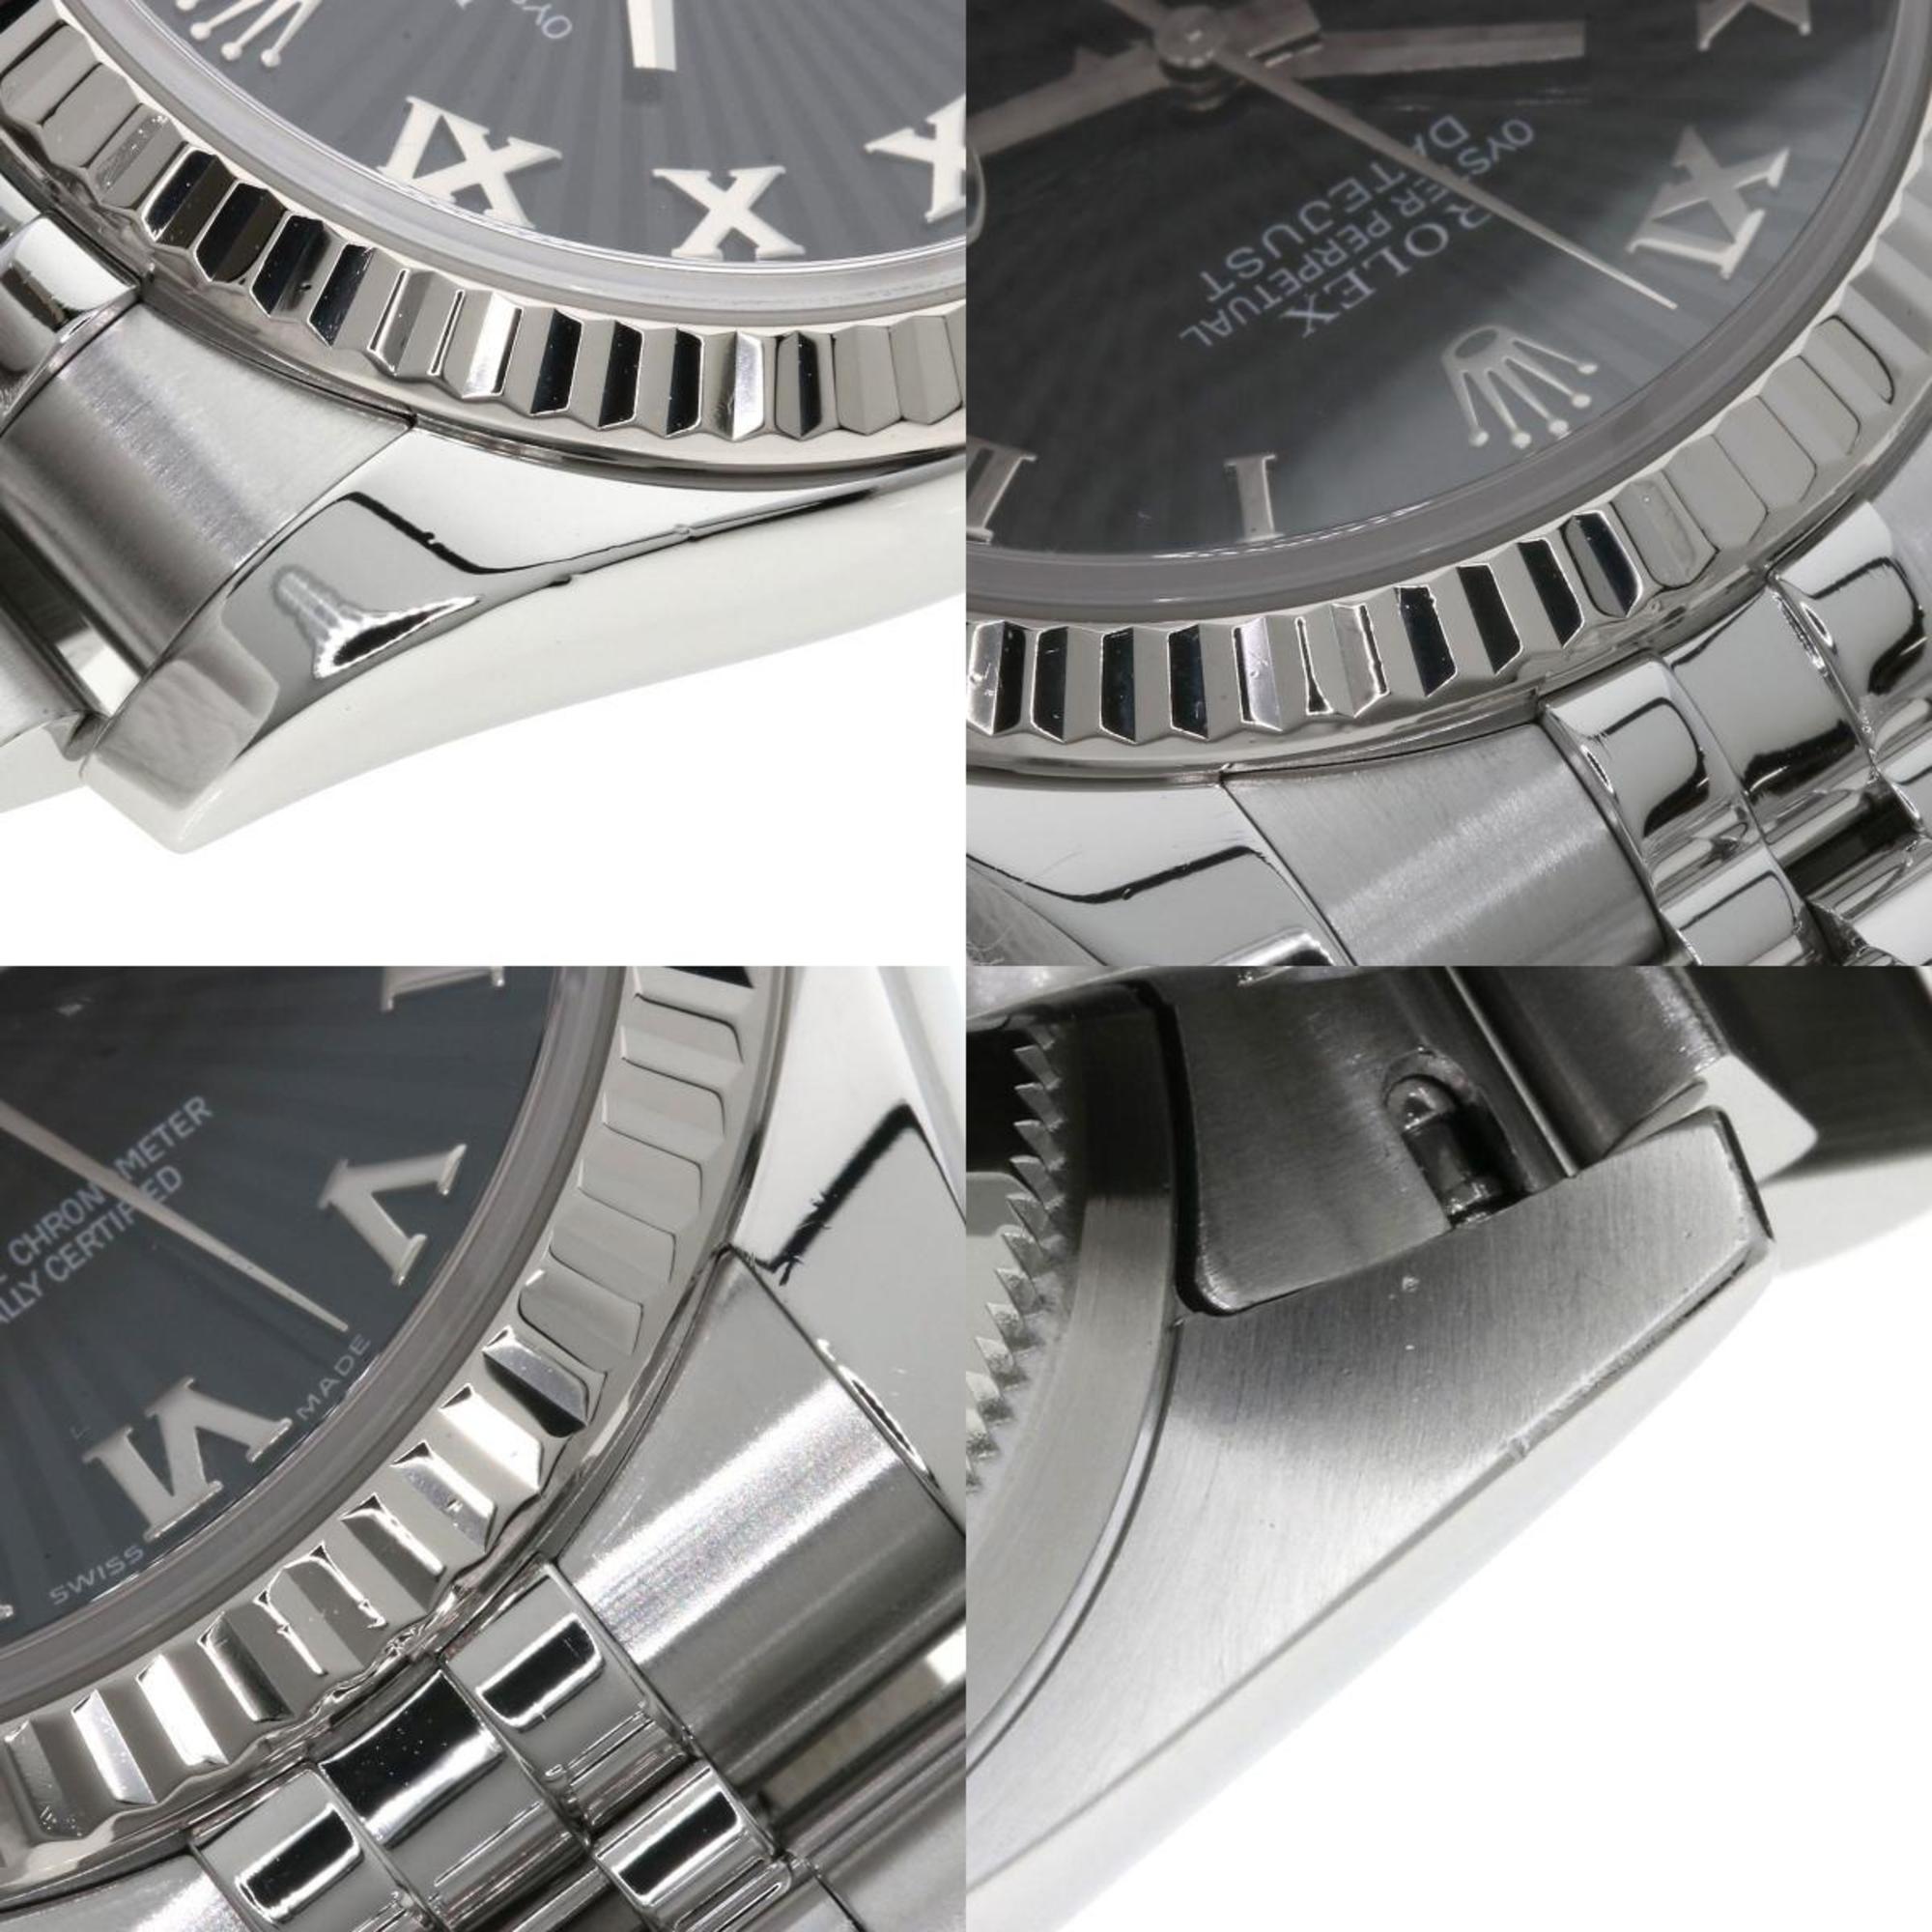 Rolex 116234 Datejust Black Sunbeam Watch Stainless Steel/SS/K18WG Men's ROLEX